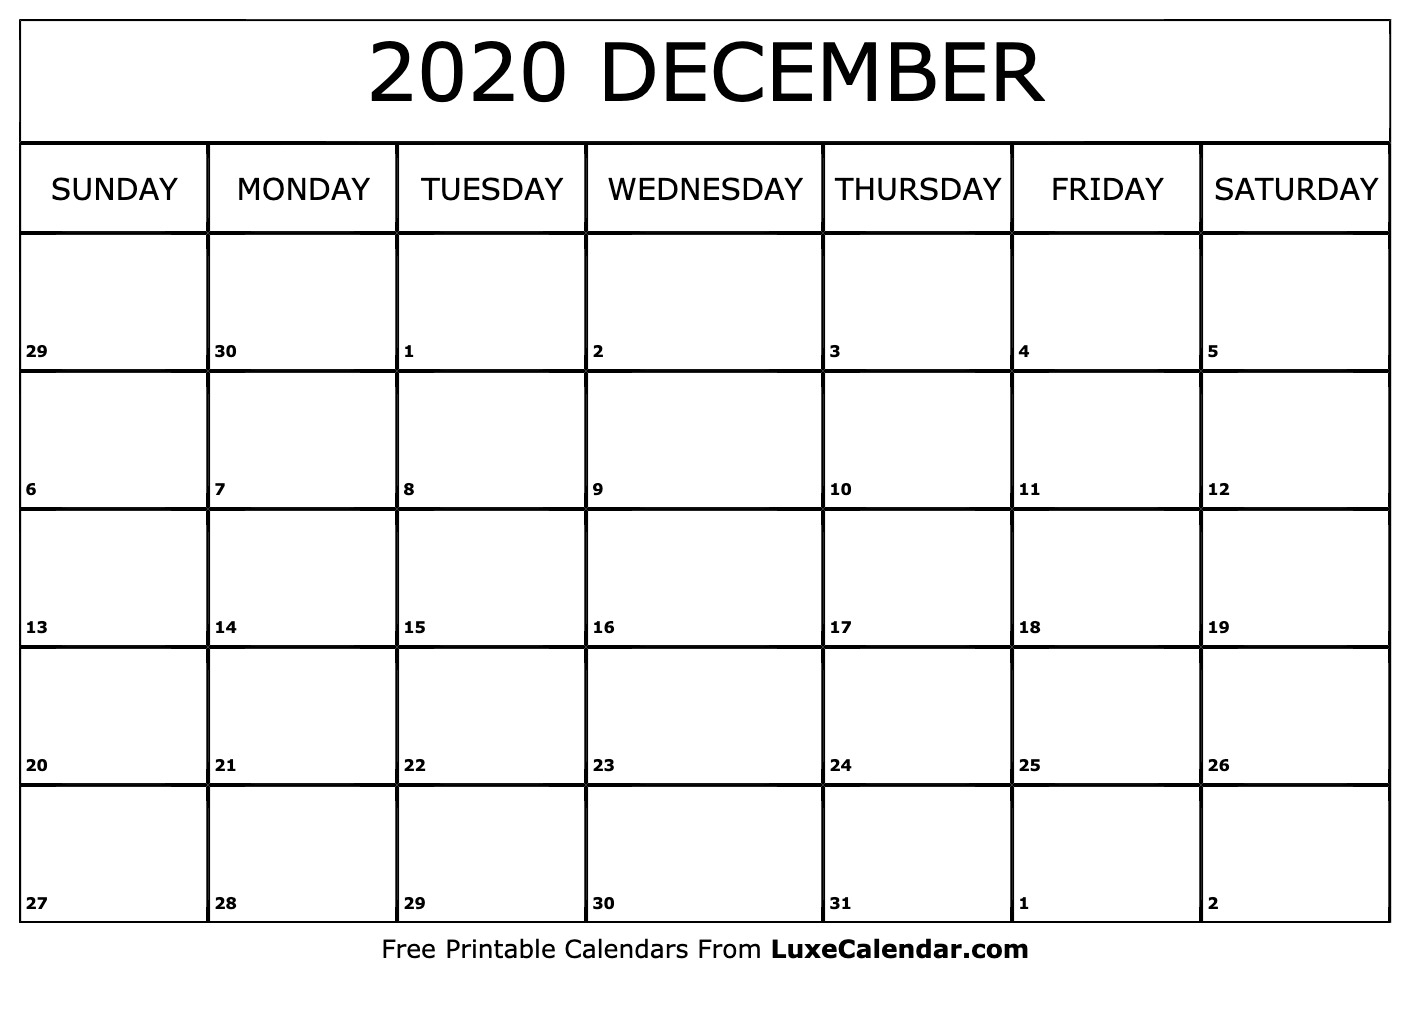 Blank December 2020 Calendar Printable - Luxe Calendar